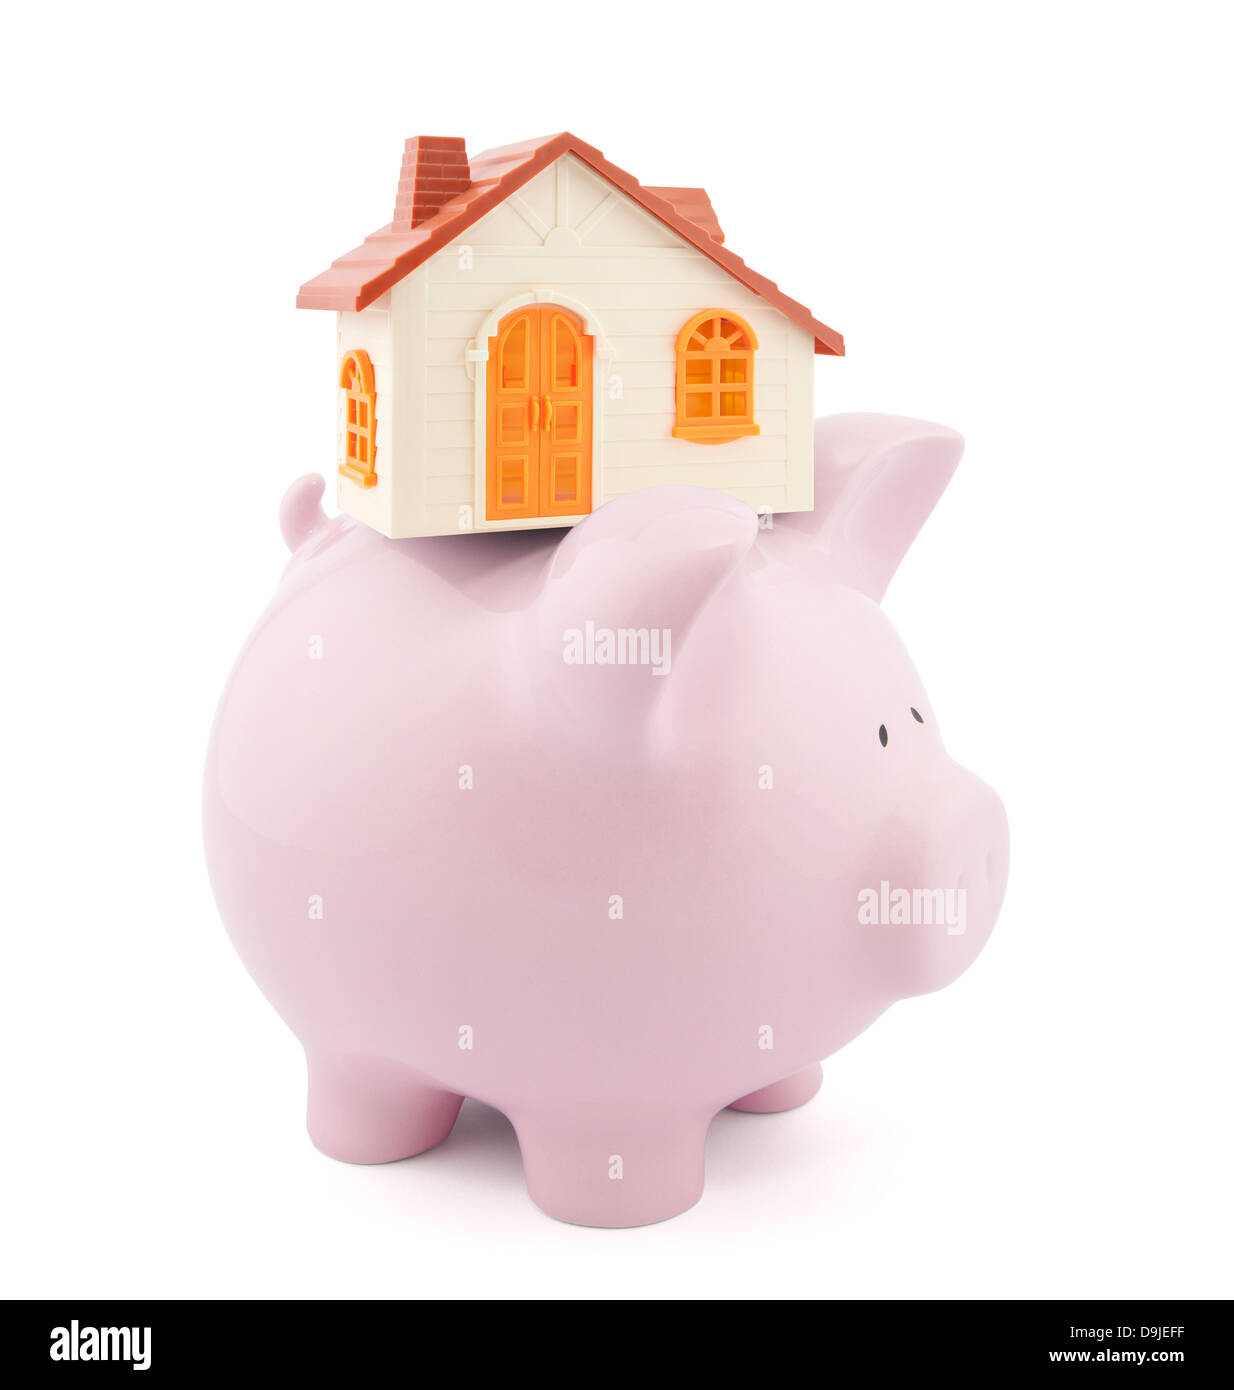 Home finances Stock Photo